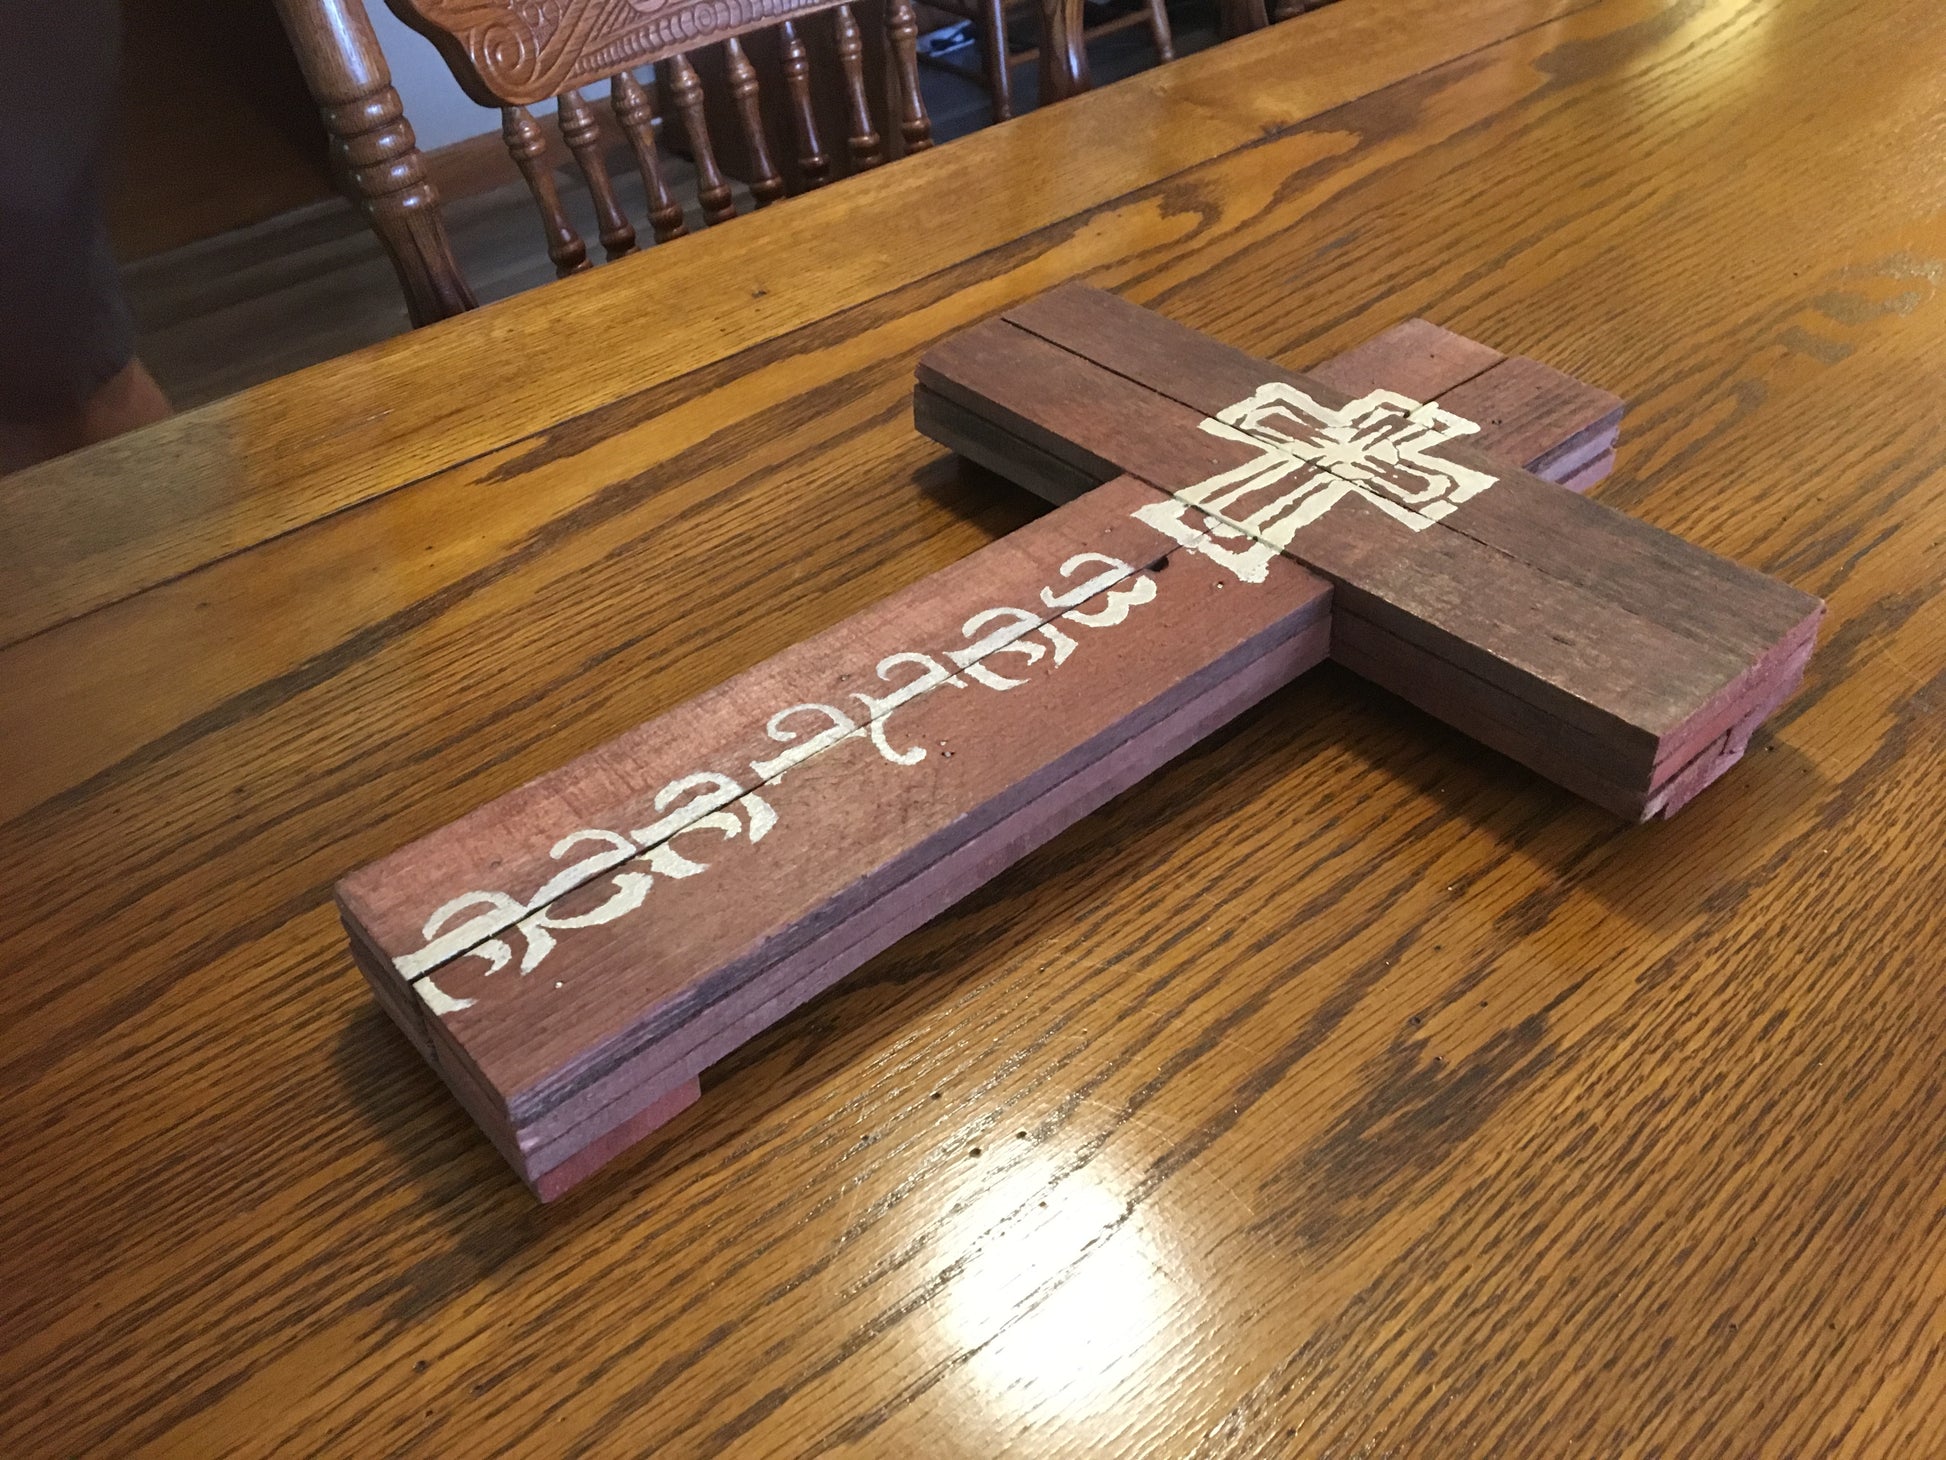 Believe pallet sign on pretty wood grain table